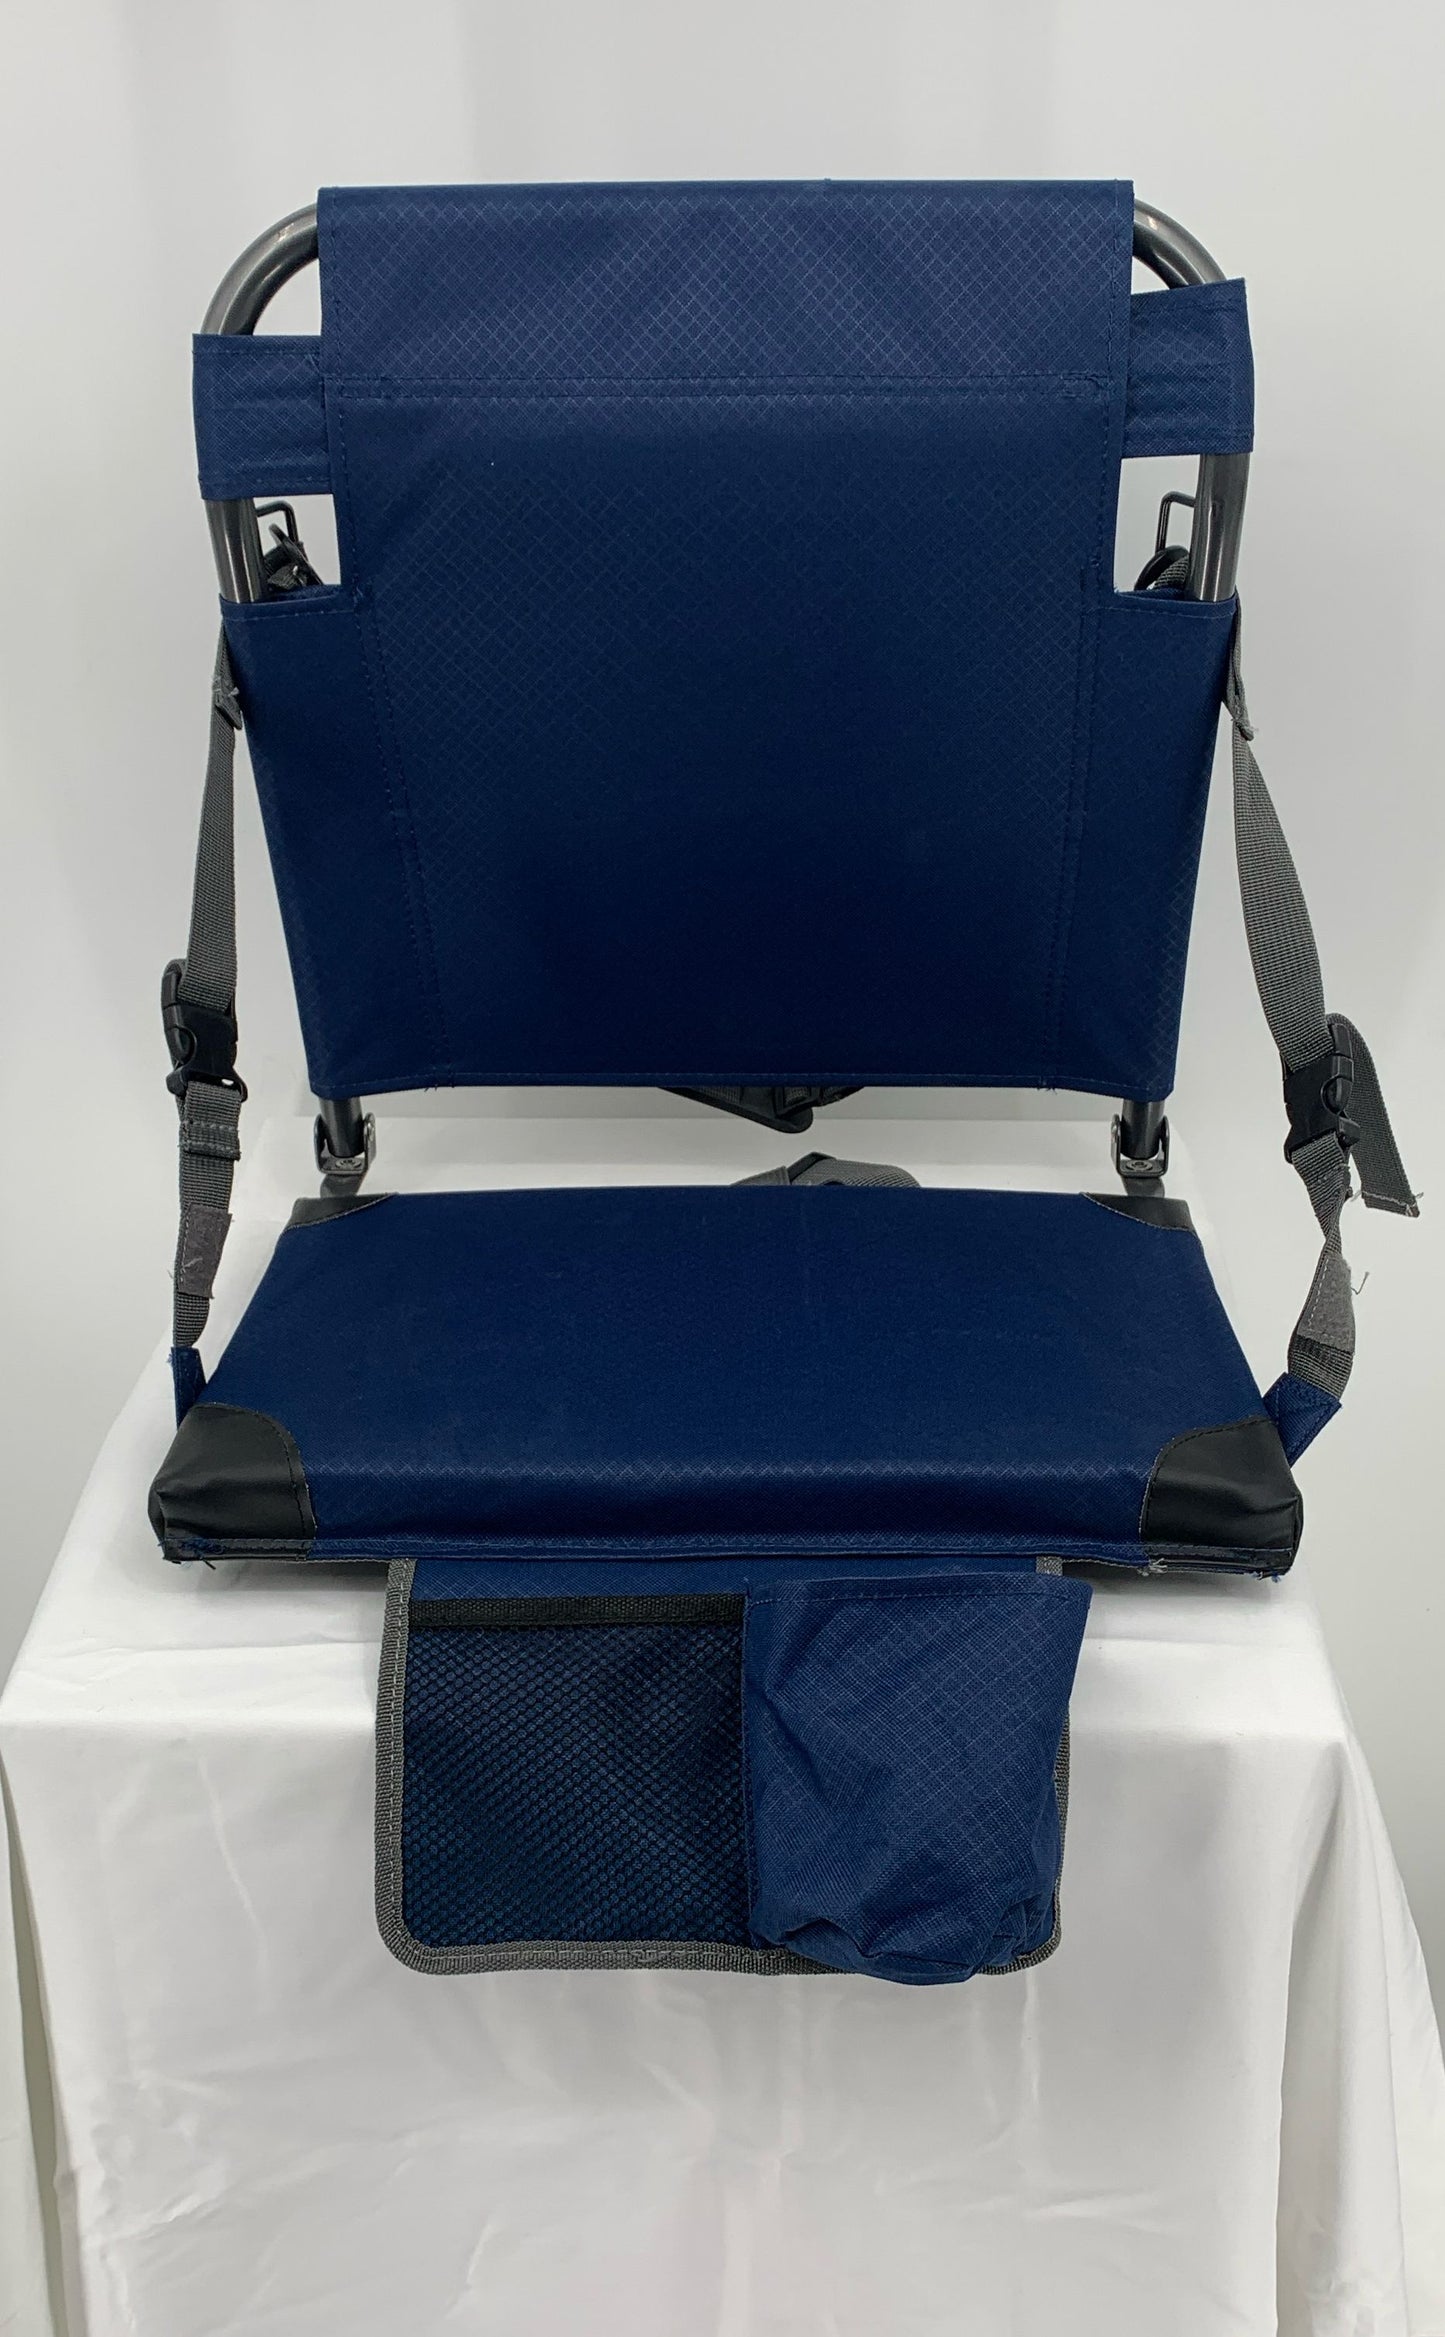 Crane Bleacher Seats Folding Stadium Seats, Camping Chair With Pockets Set Of 2